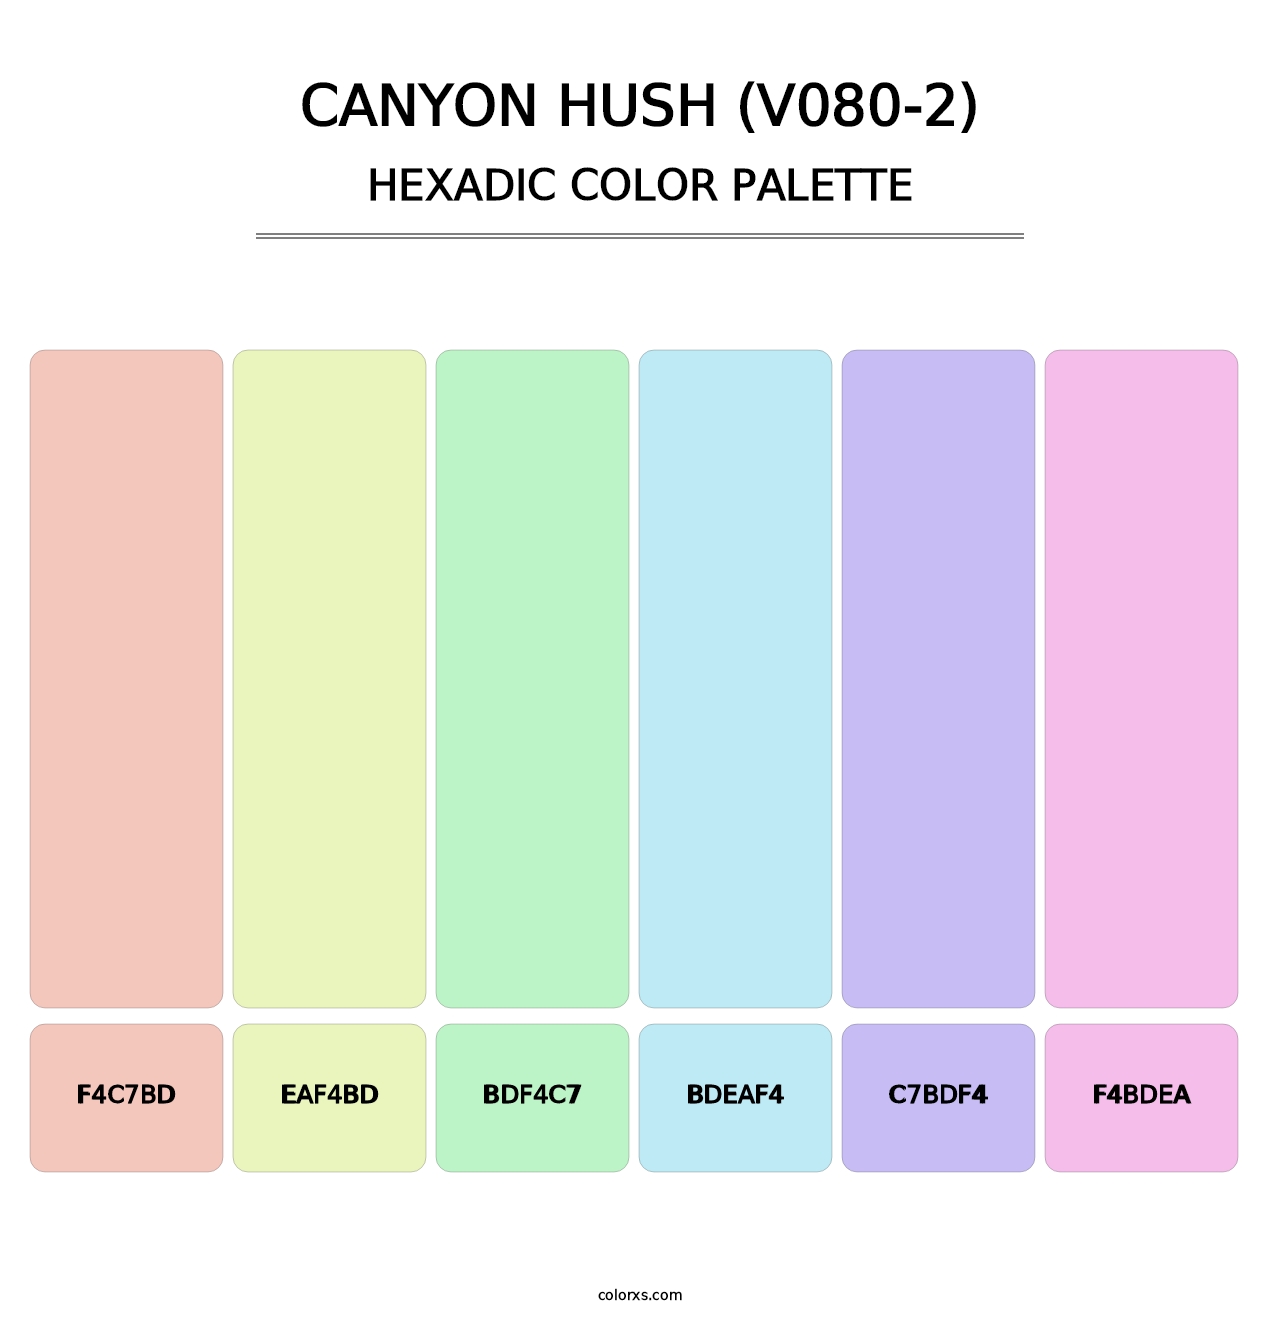 Canyon Hush (V080-2) - Hexadic Color Palette